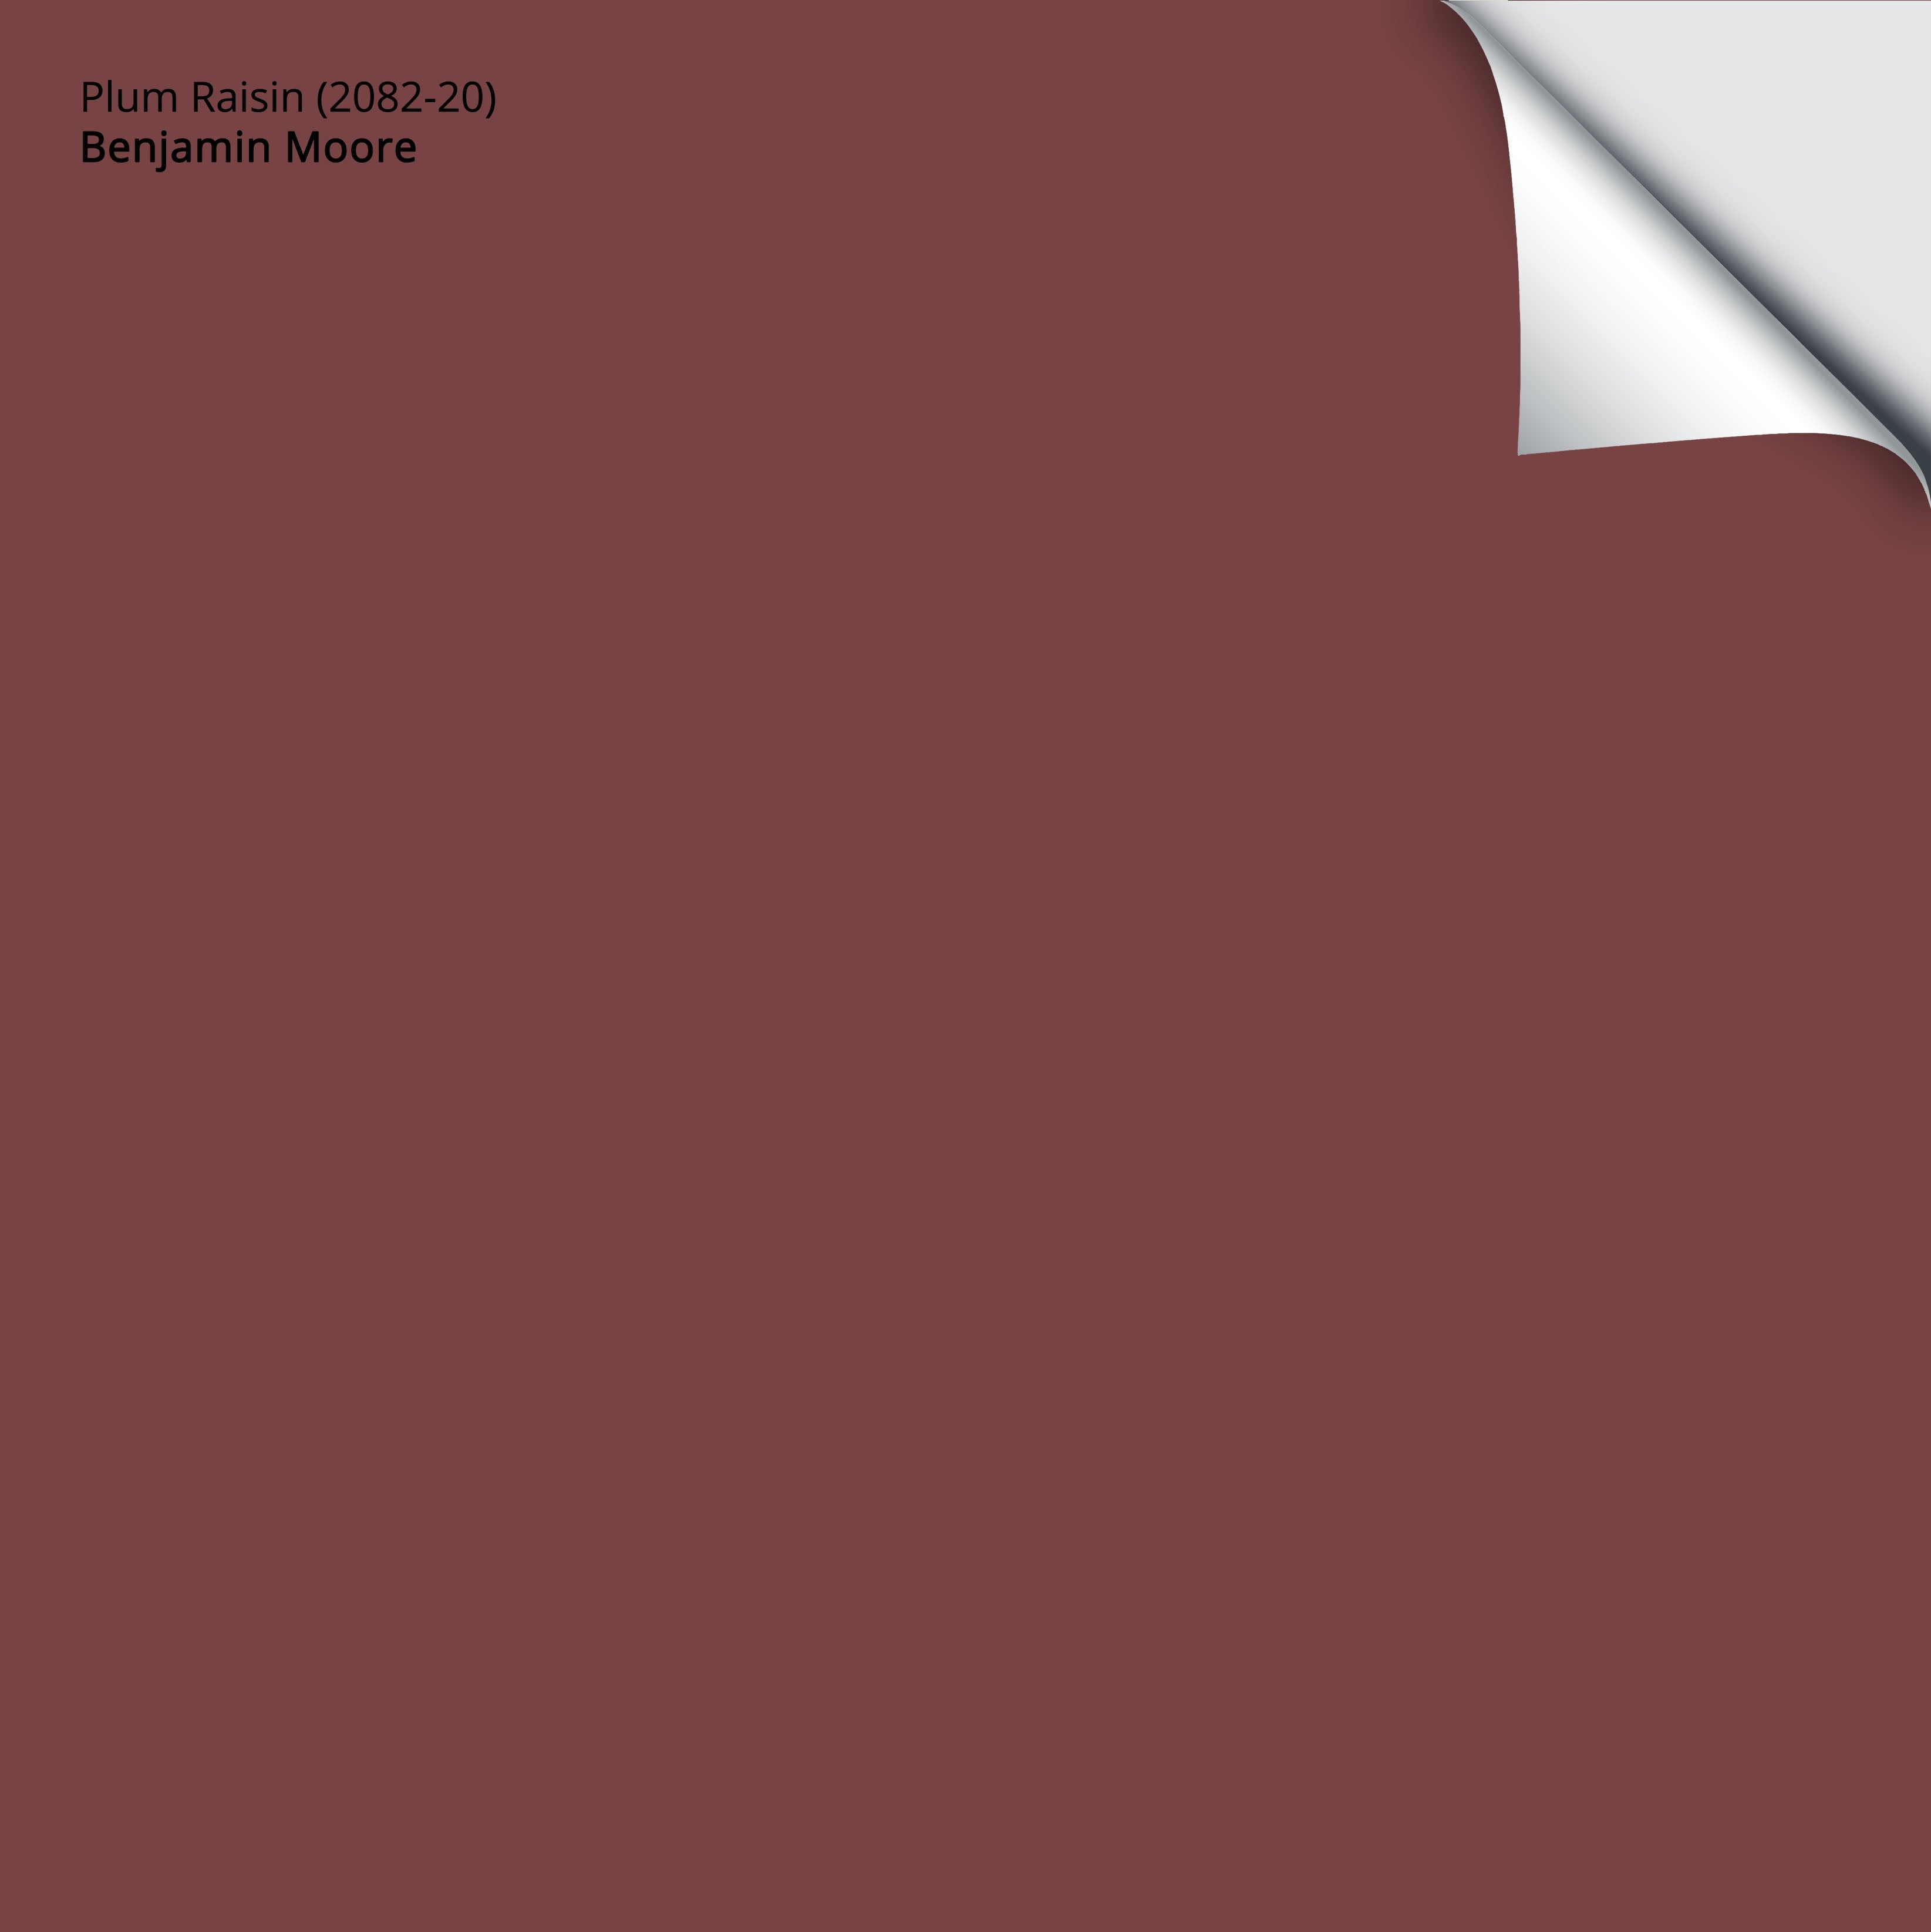 Plum Raisin (2082-20): 9"x14.75" – Benjamin Moore x Samplize